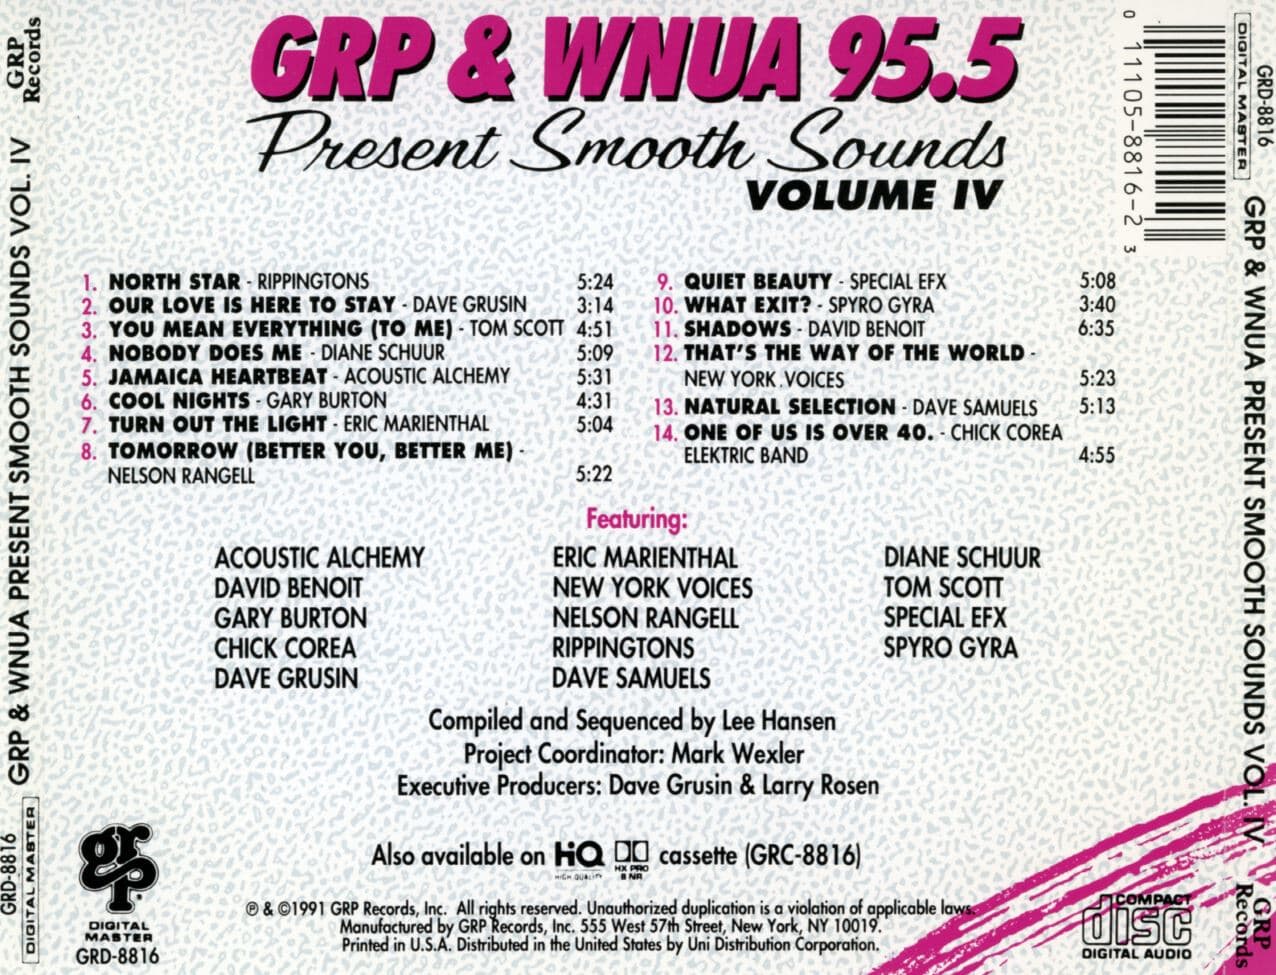 GRP & WNUA 95.5 Present Smooth Sounds Volume IV